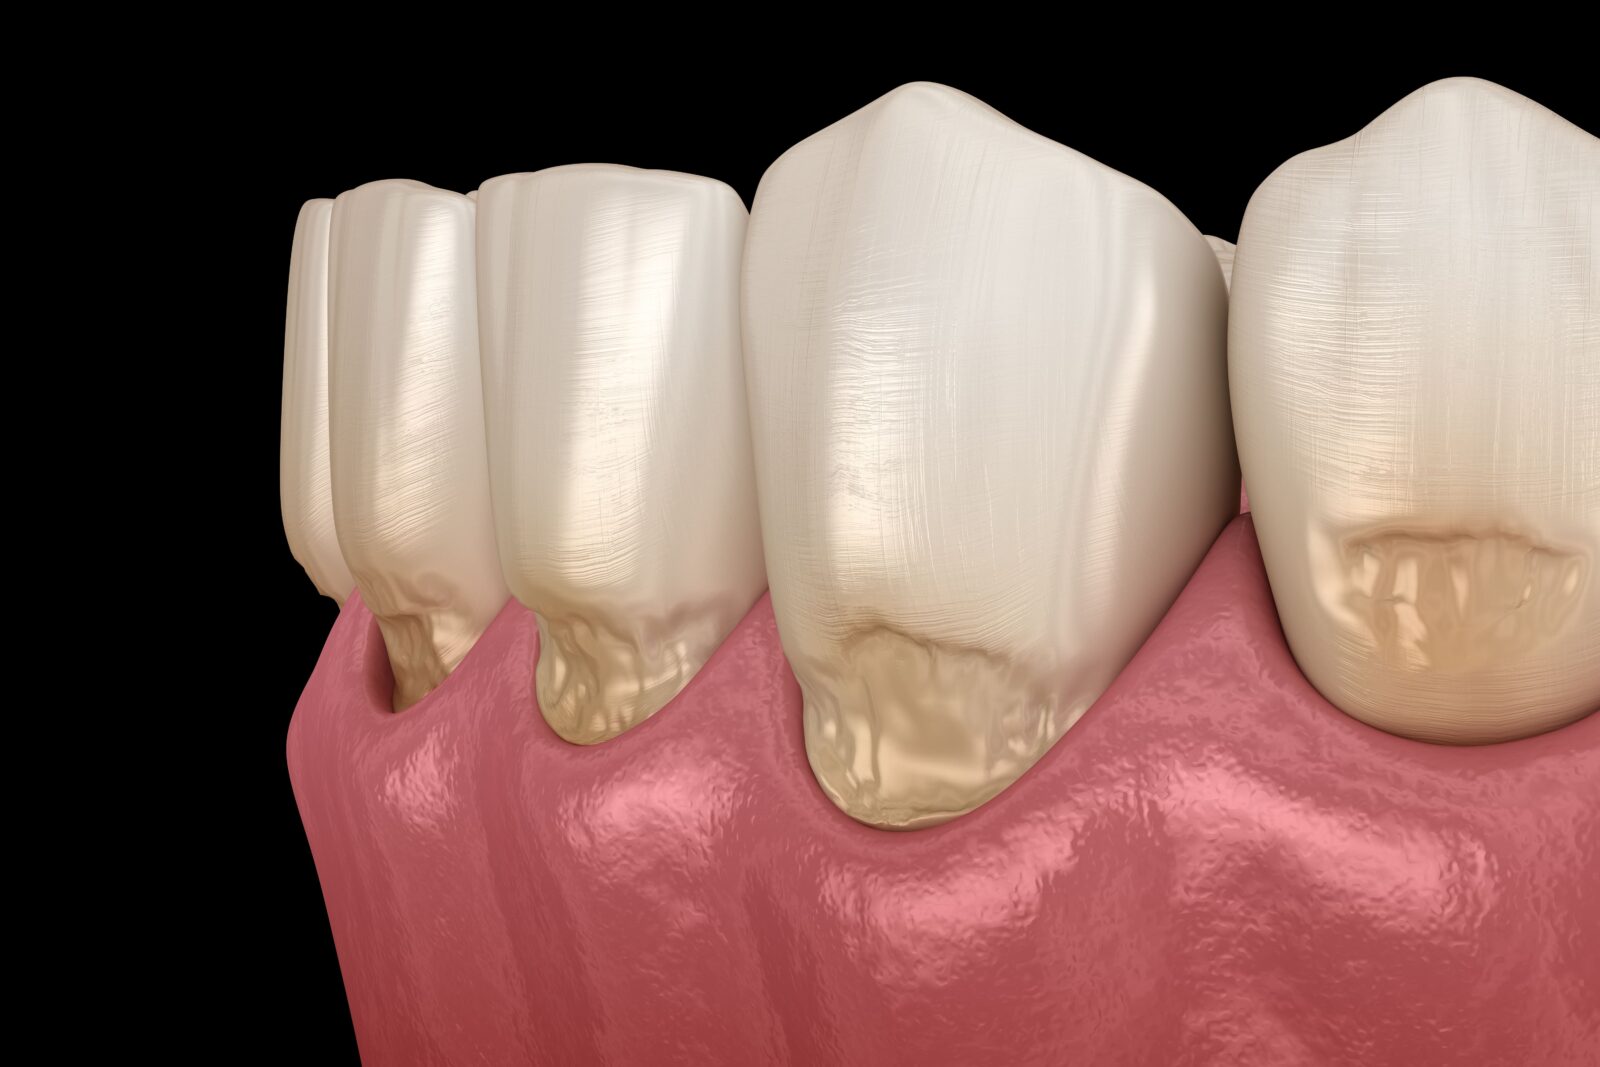 abfraction of anterior teeth